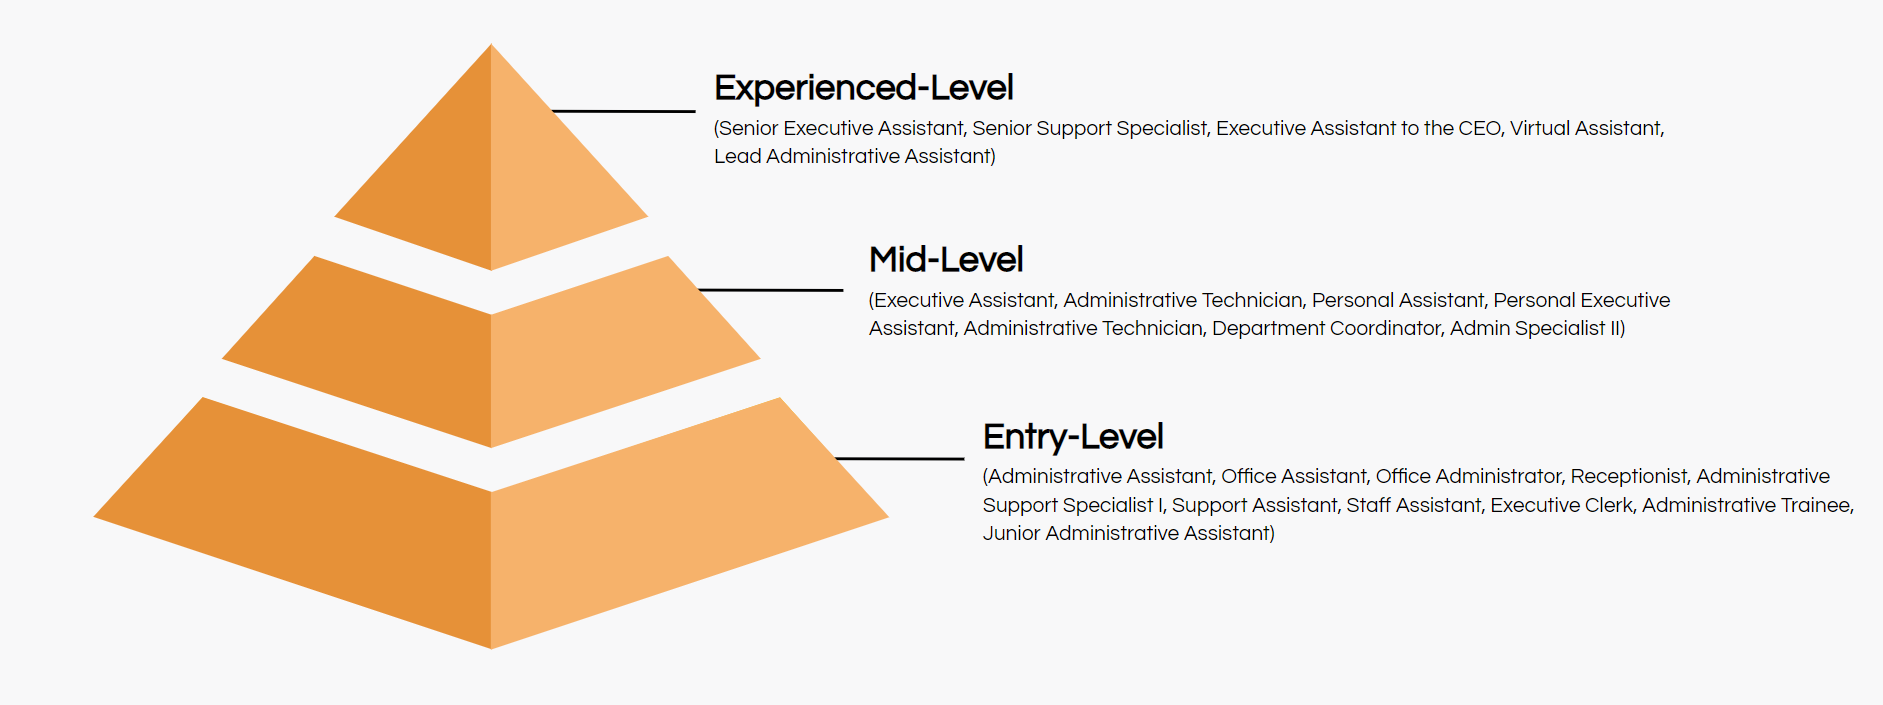 executive assistant job titles hierarchy